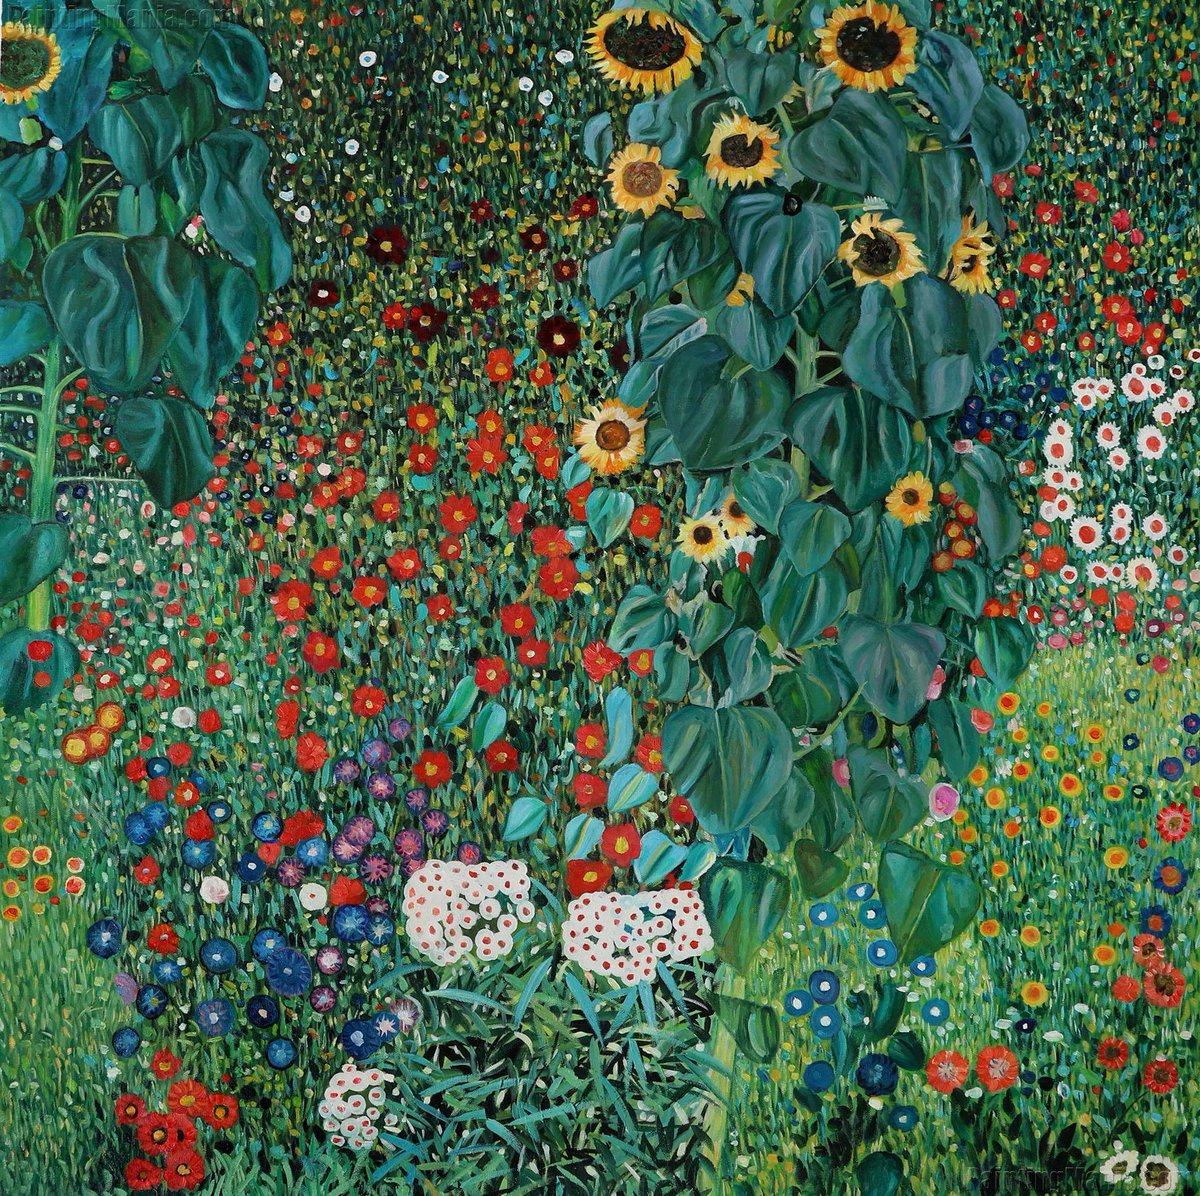 Farm Garden with Sunflowers - Gustav Klimt
#SunflowersForUkraine